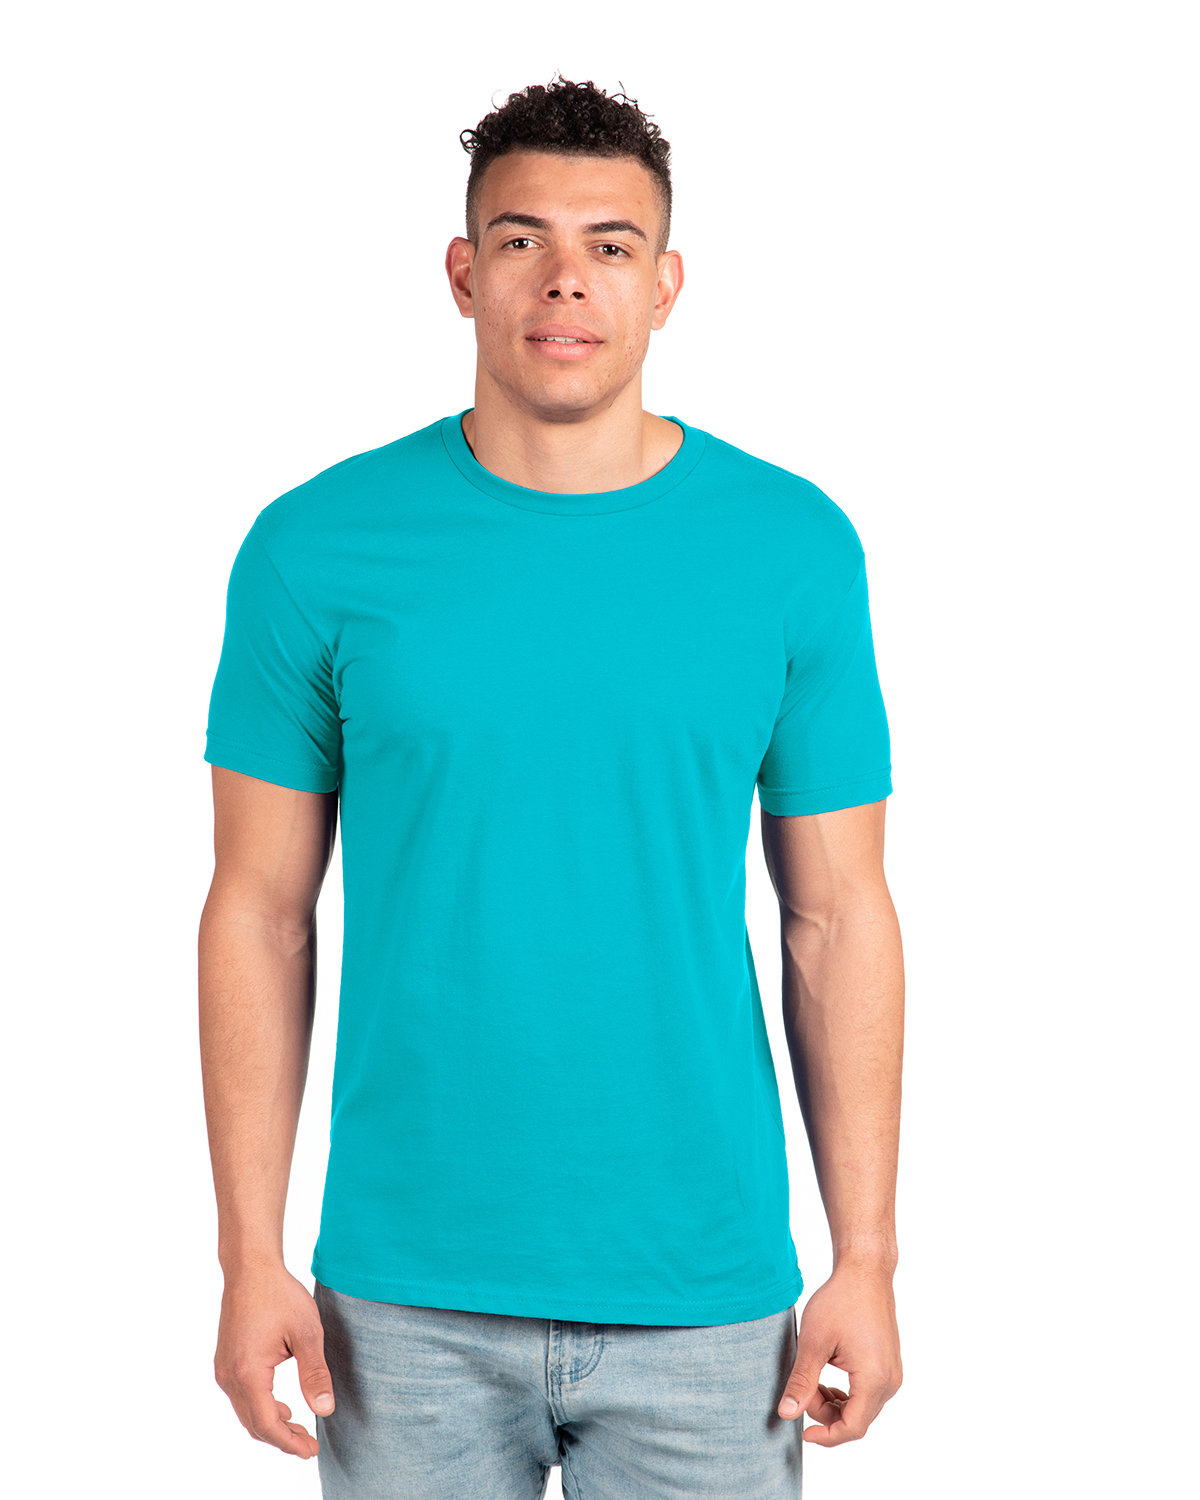 Next Level Apparel Unisex Cotton T-Shirt TAHITI BLUE 